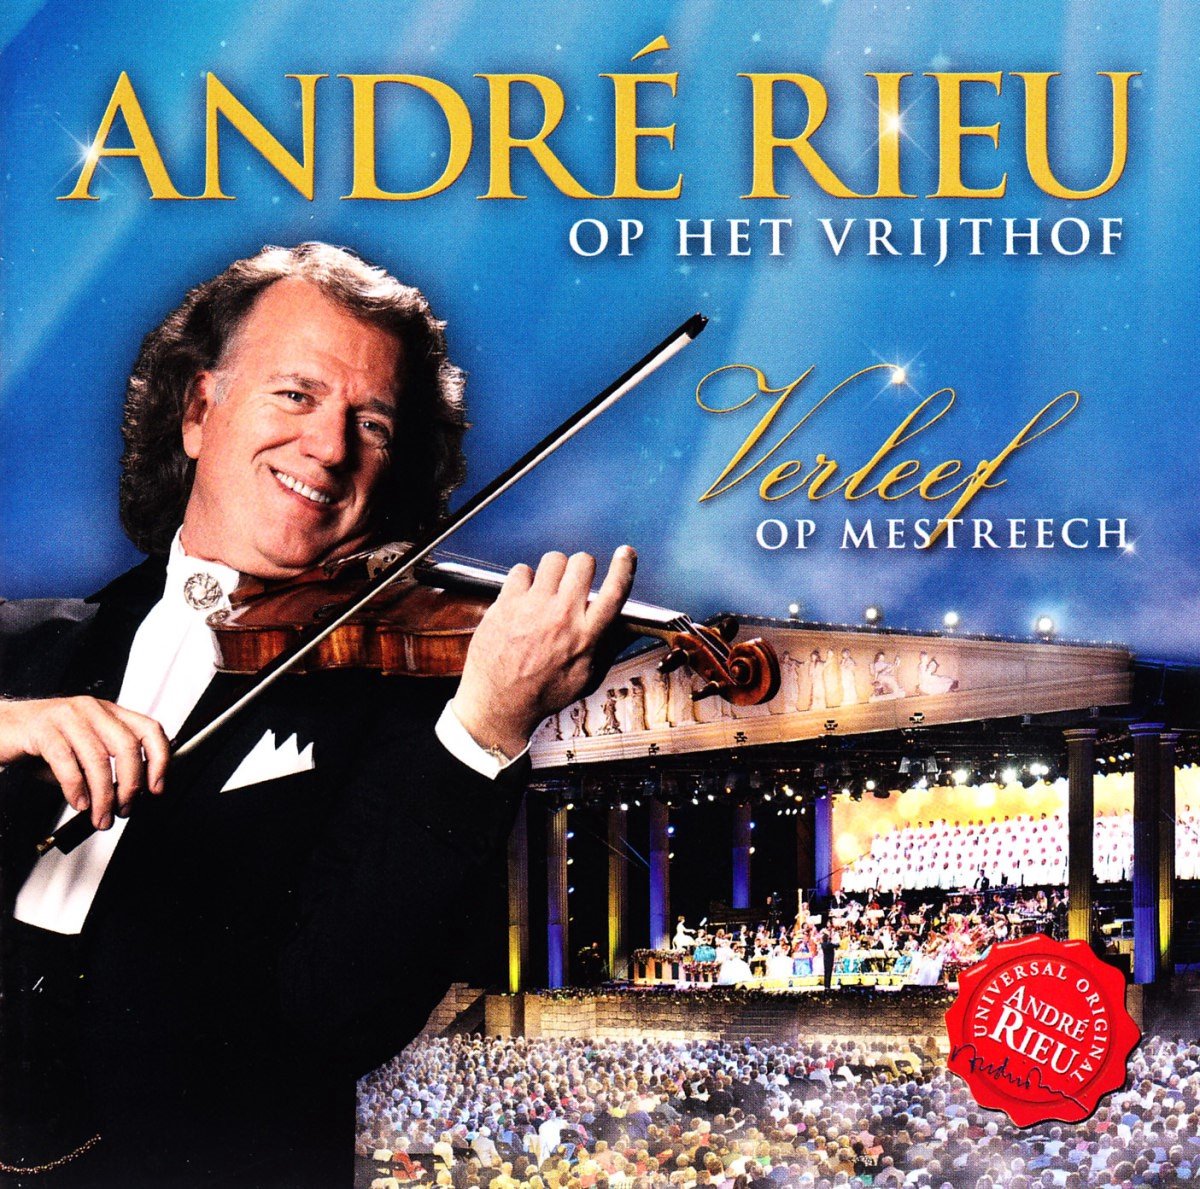 André Rieu - André Rieu Op Het Vrijthof - Verleef op Mestreech (CD) - André Rieu